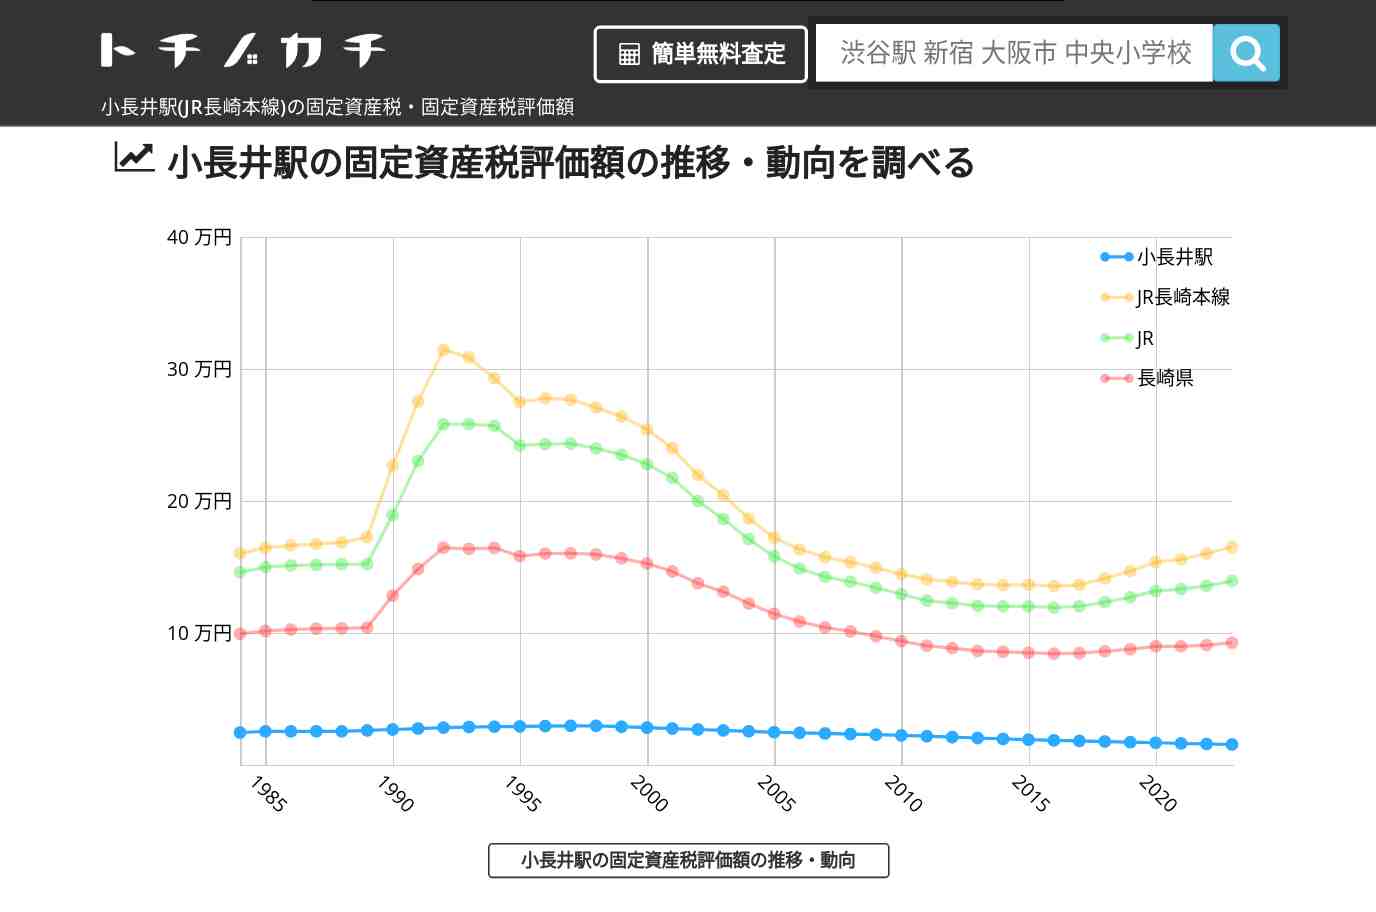 小長井駅(JR長崎本線)の固定資産税・固定資産税評価額 | トチノカチ